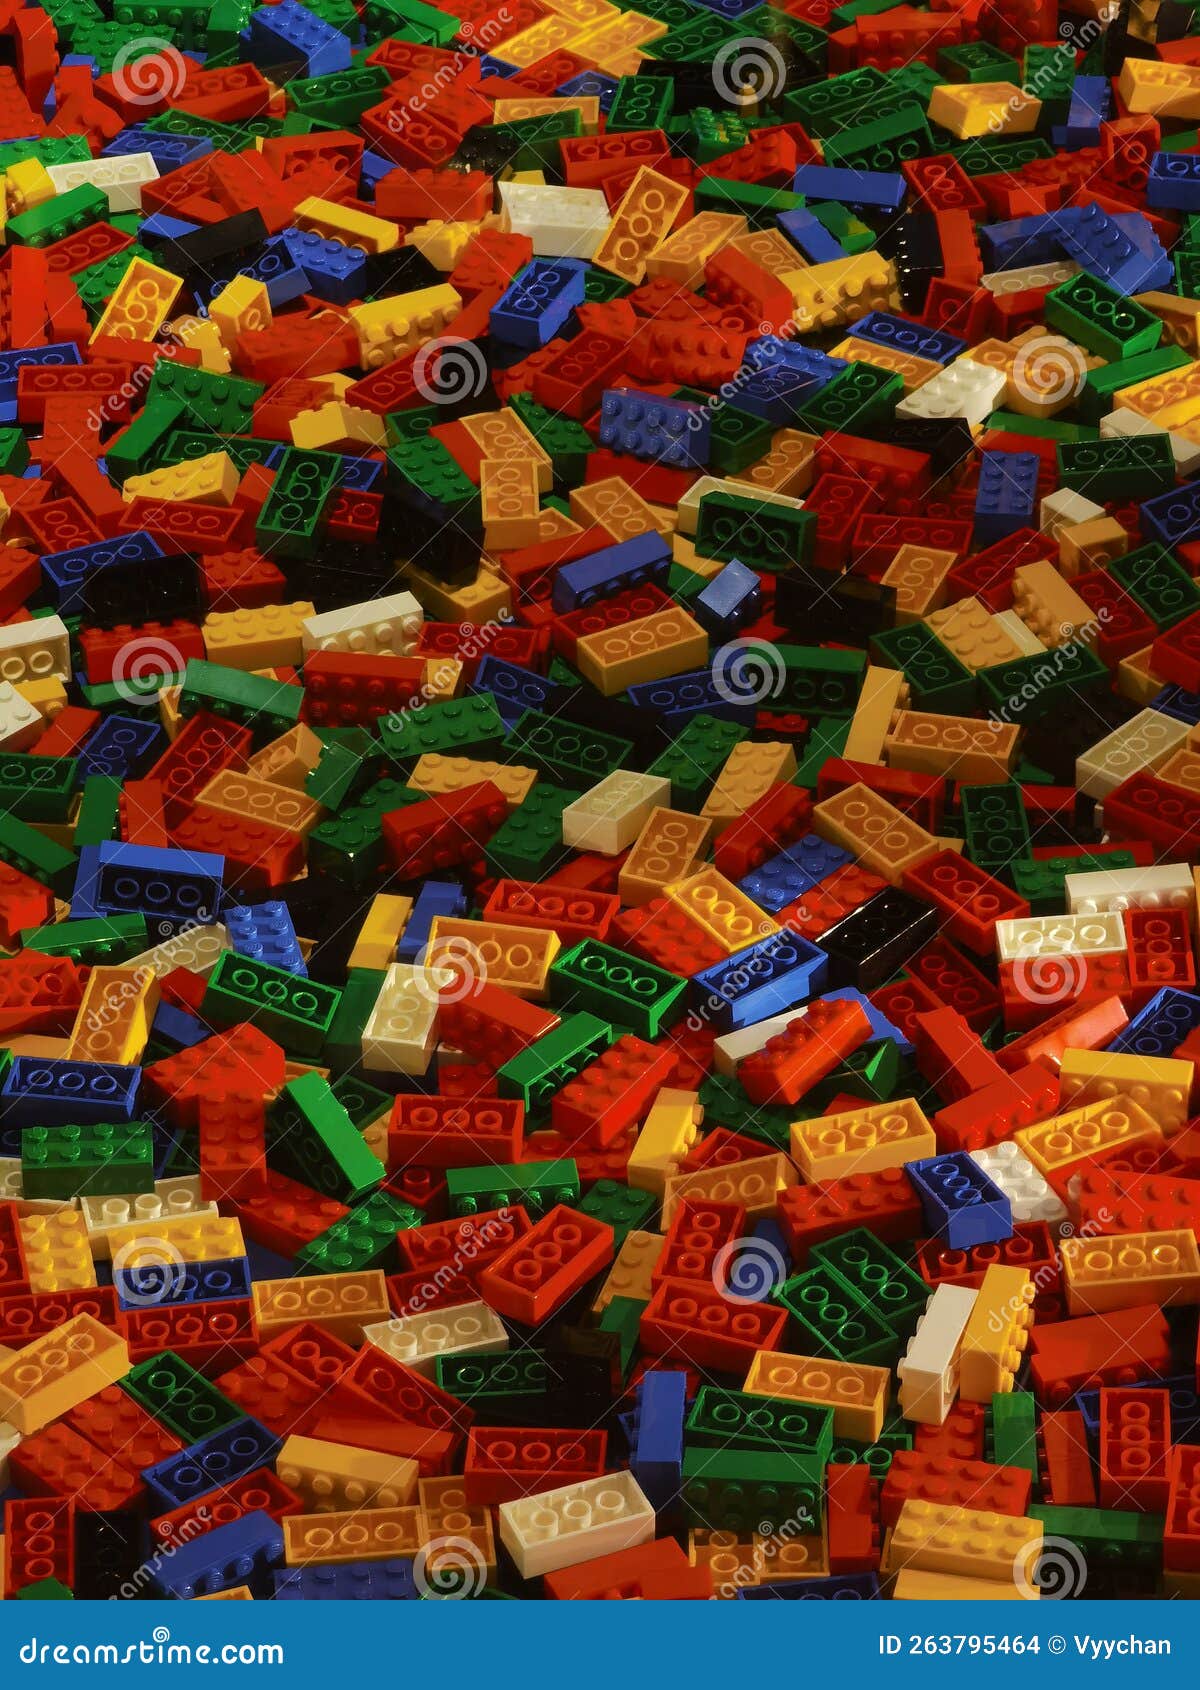 Portuguese Macau Galaxy Resort LV Louis Vuitton Colorful Lego Block Window  Display Macao Taipa Cotai Retail Display Stock Photo - Image of lego,  market: 263795464